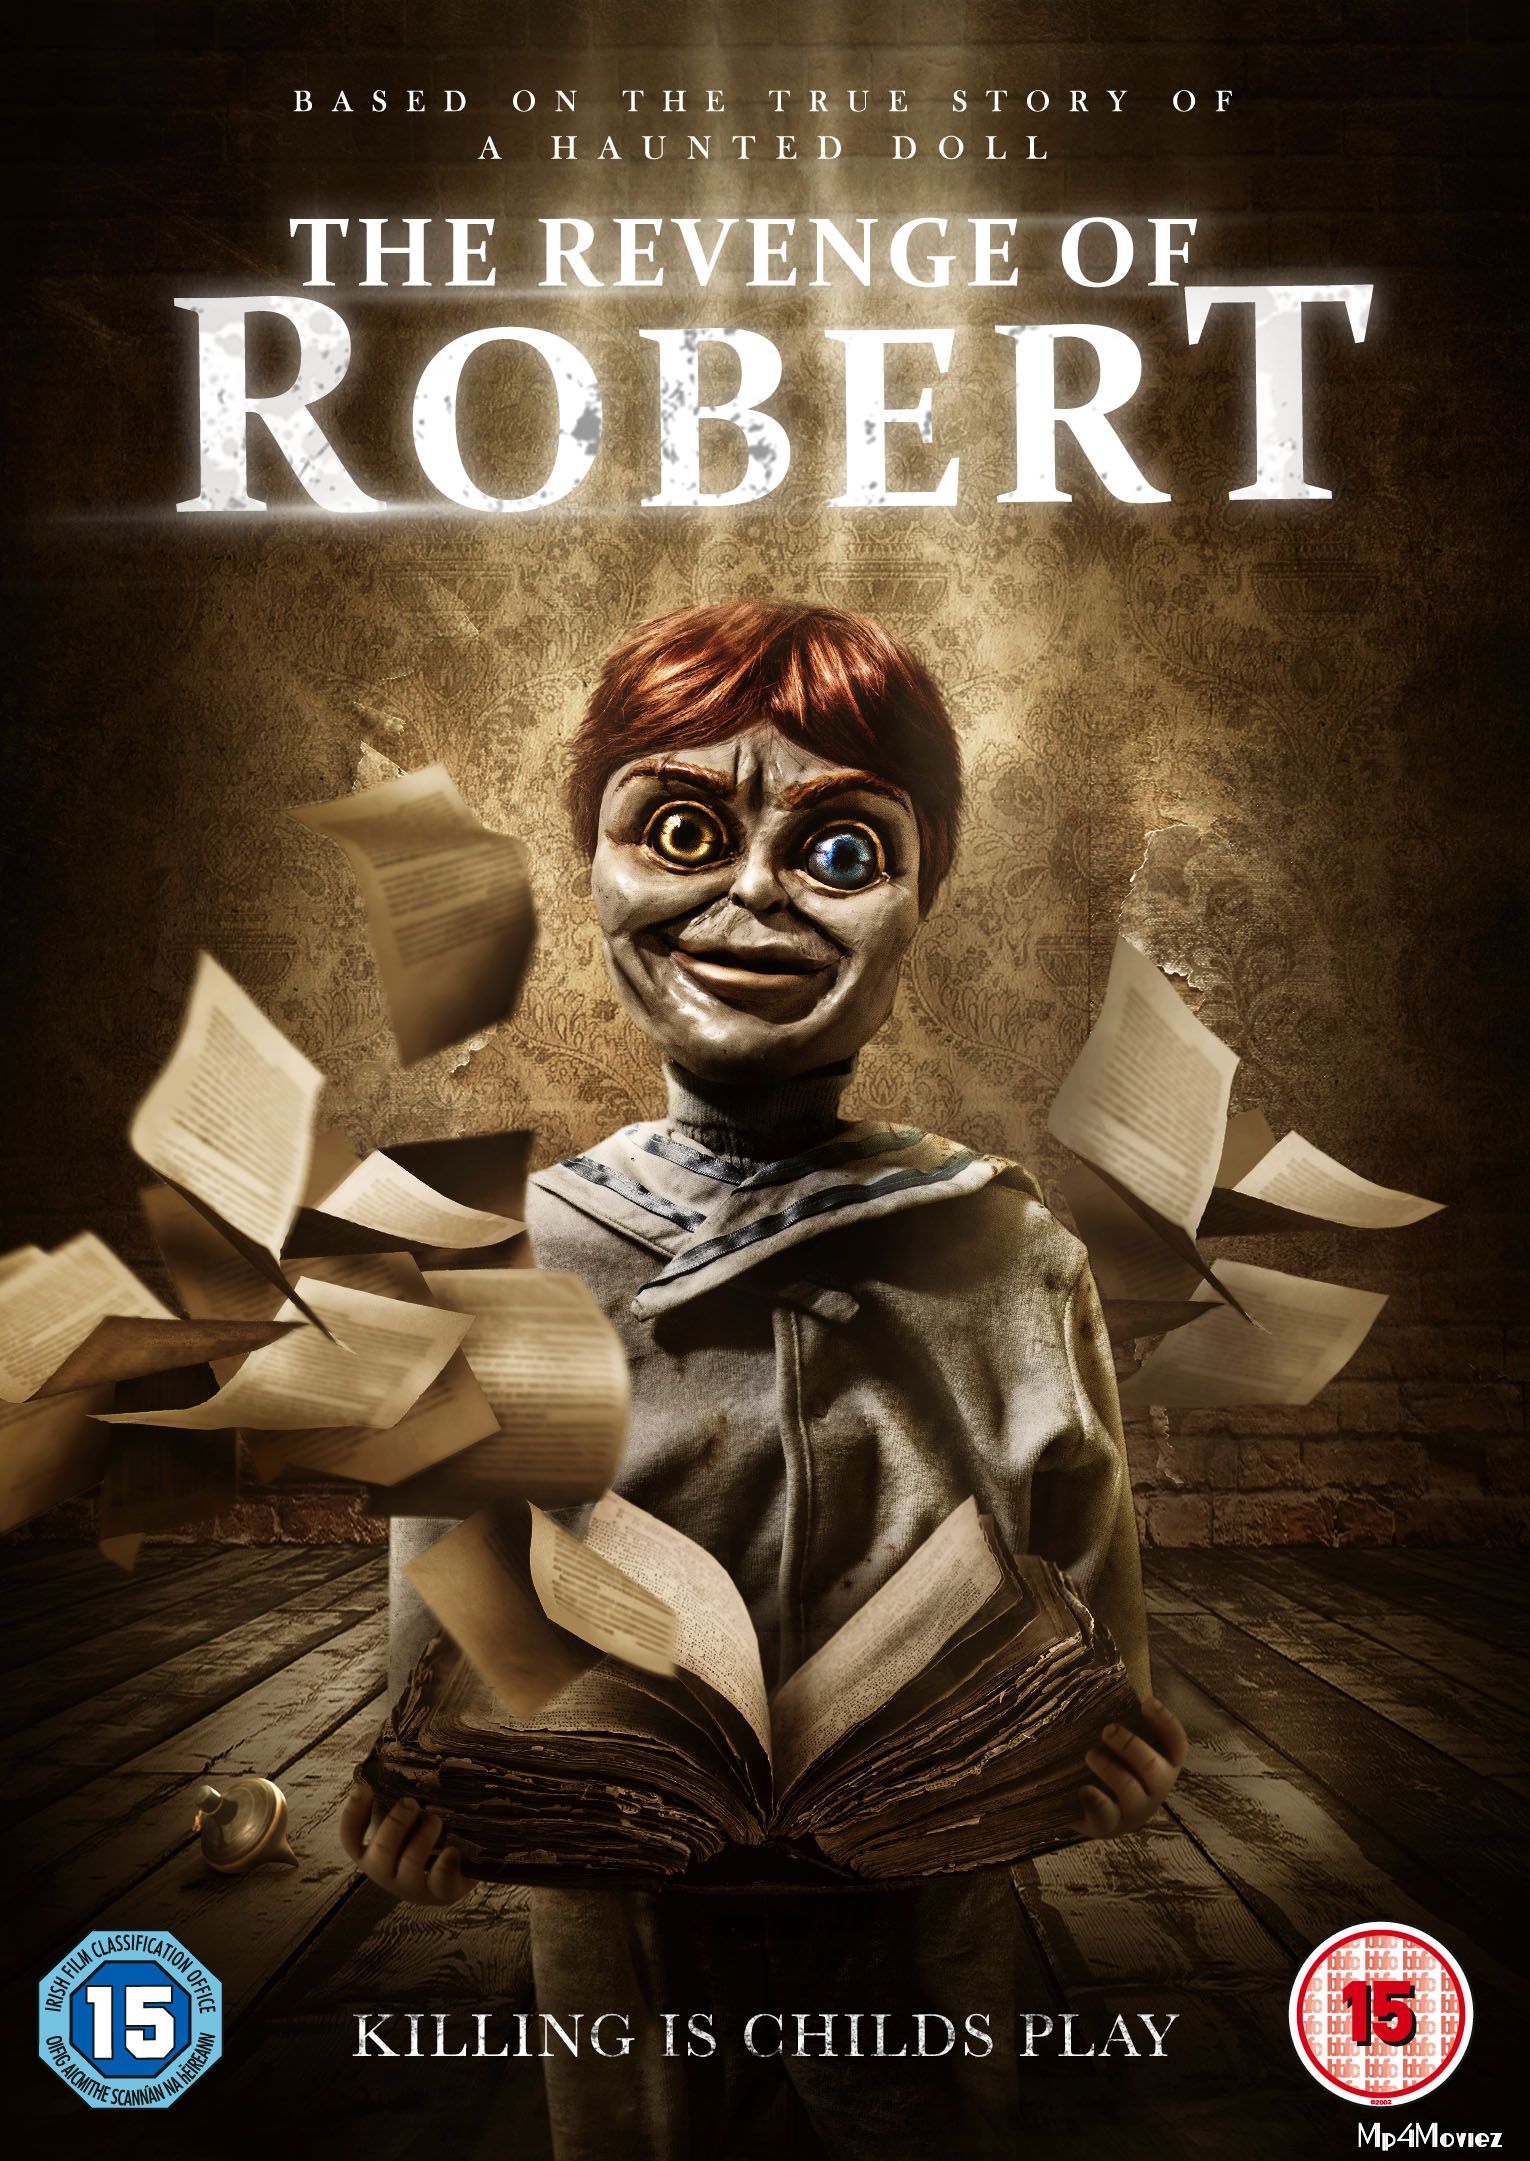 The Revenge of Robert the Doll 2018 Hindi Dubbed Full Movie download full movie